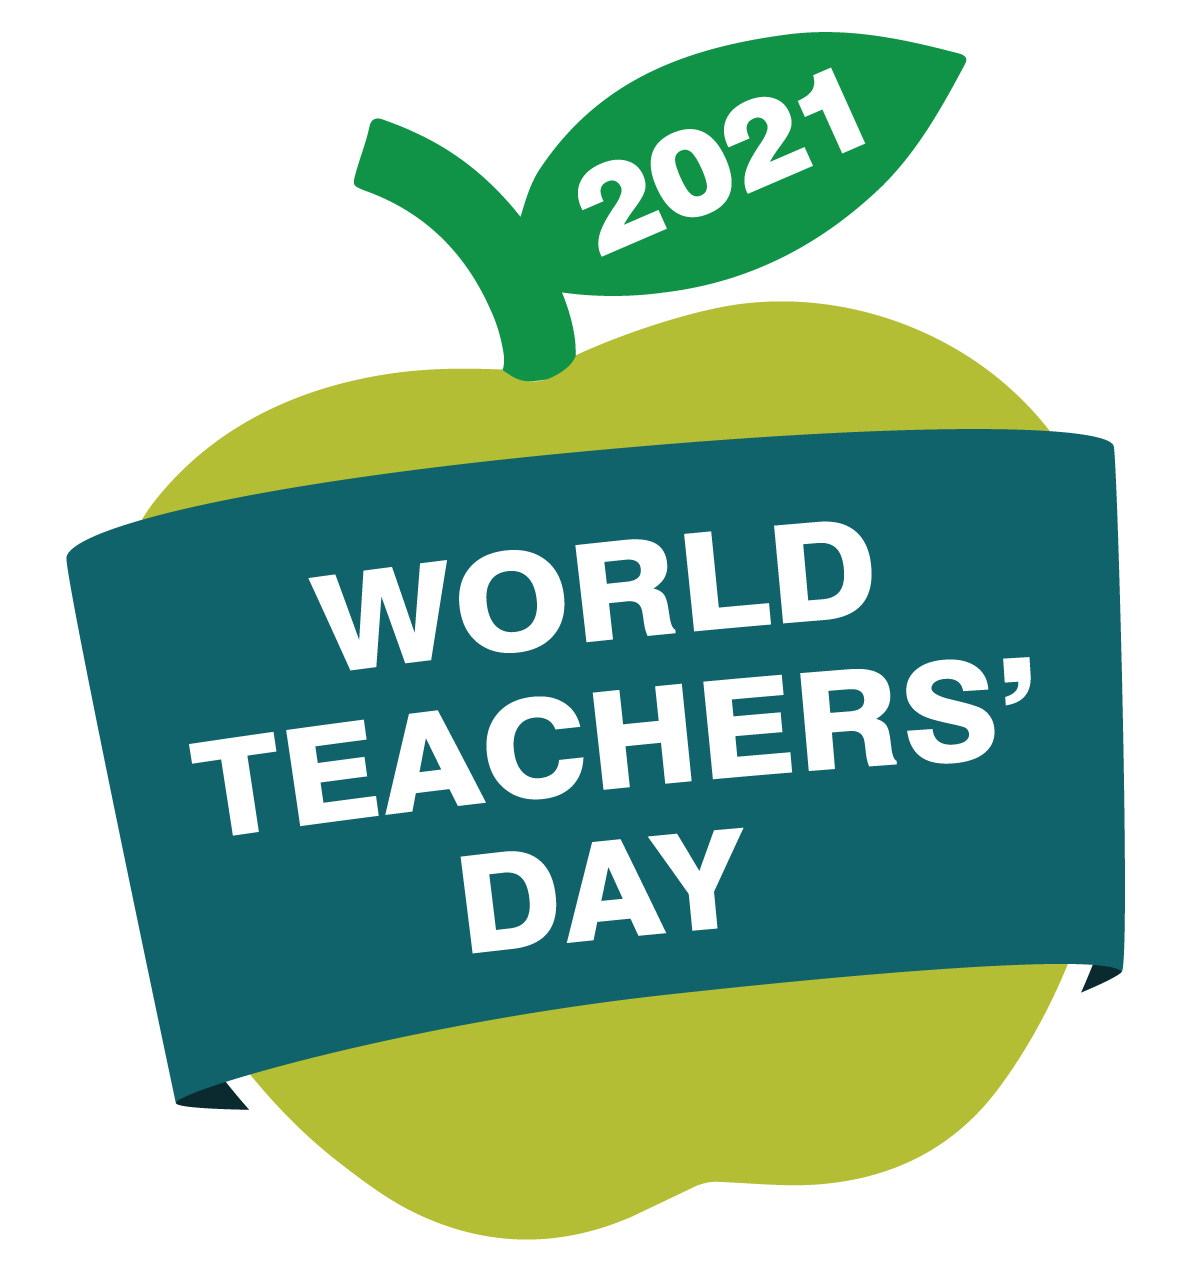 World Teachers' Day; 5 October